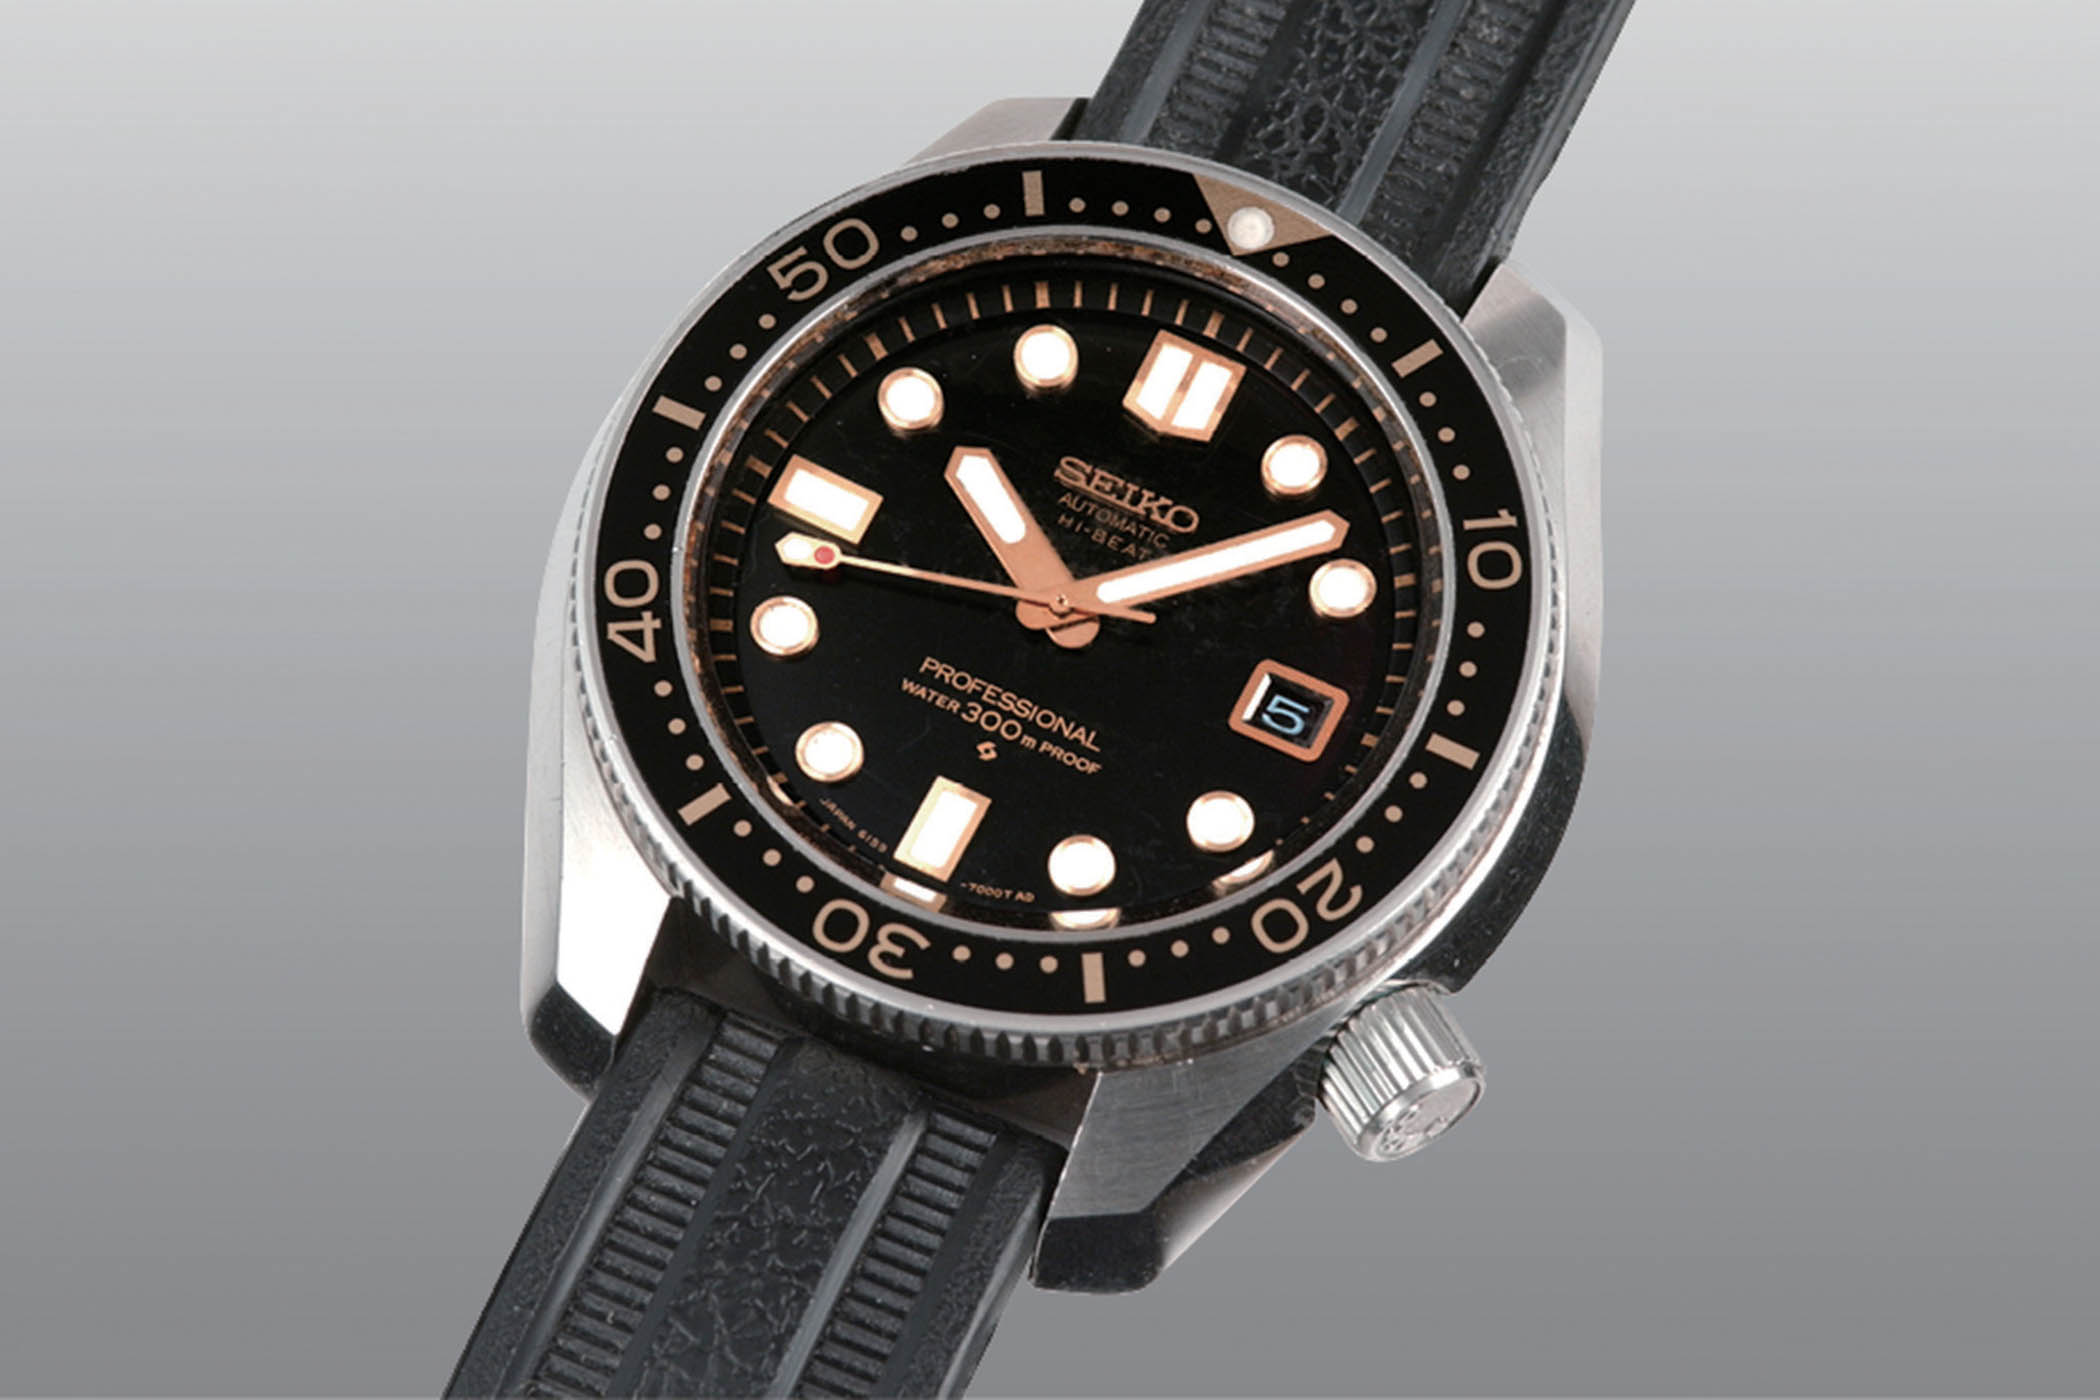 1968-Seiko-Diver-300m-hi-beat-6159-7001 - First Class Watches Blog